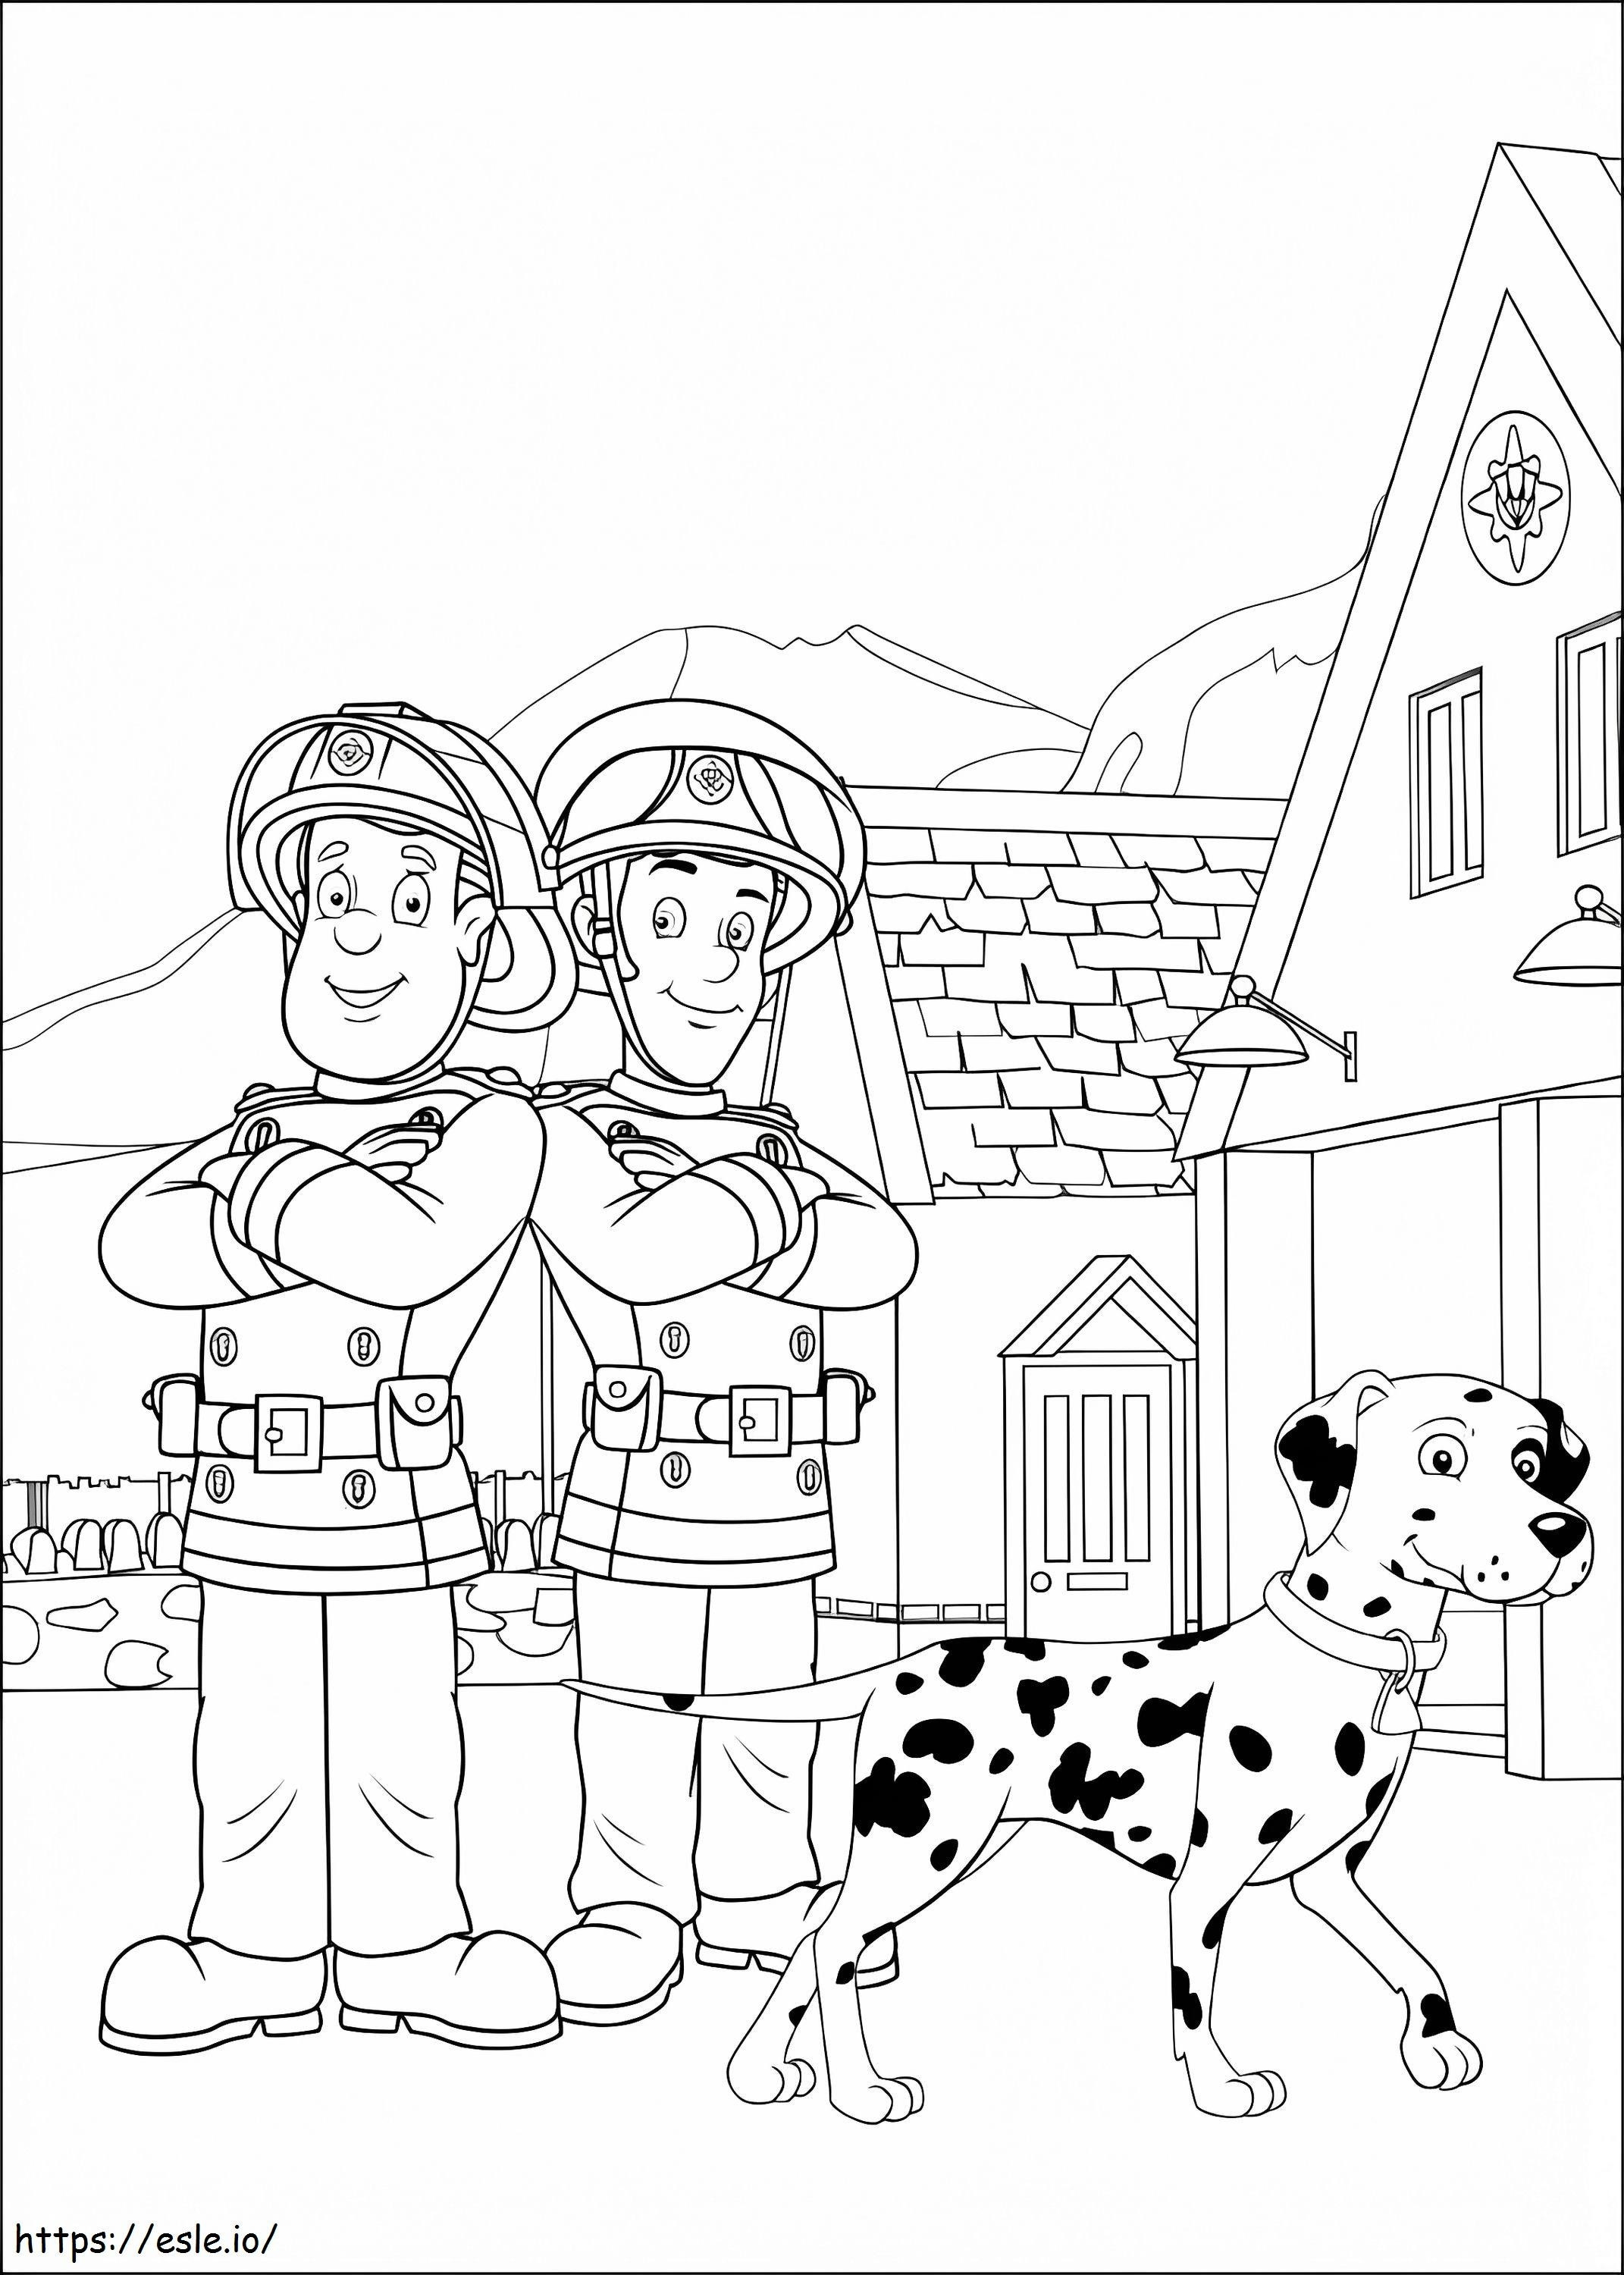 Fireman Sam Characters 5 coloring page